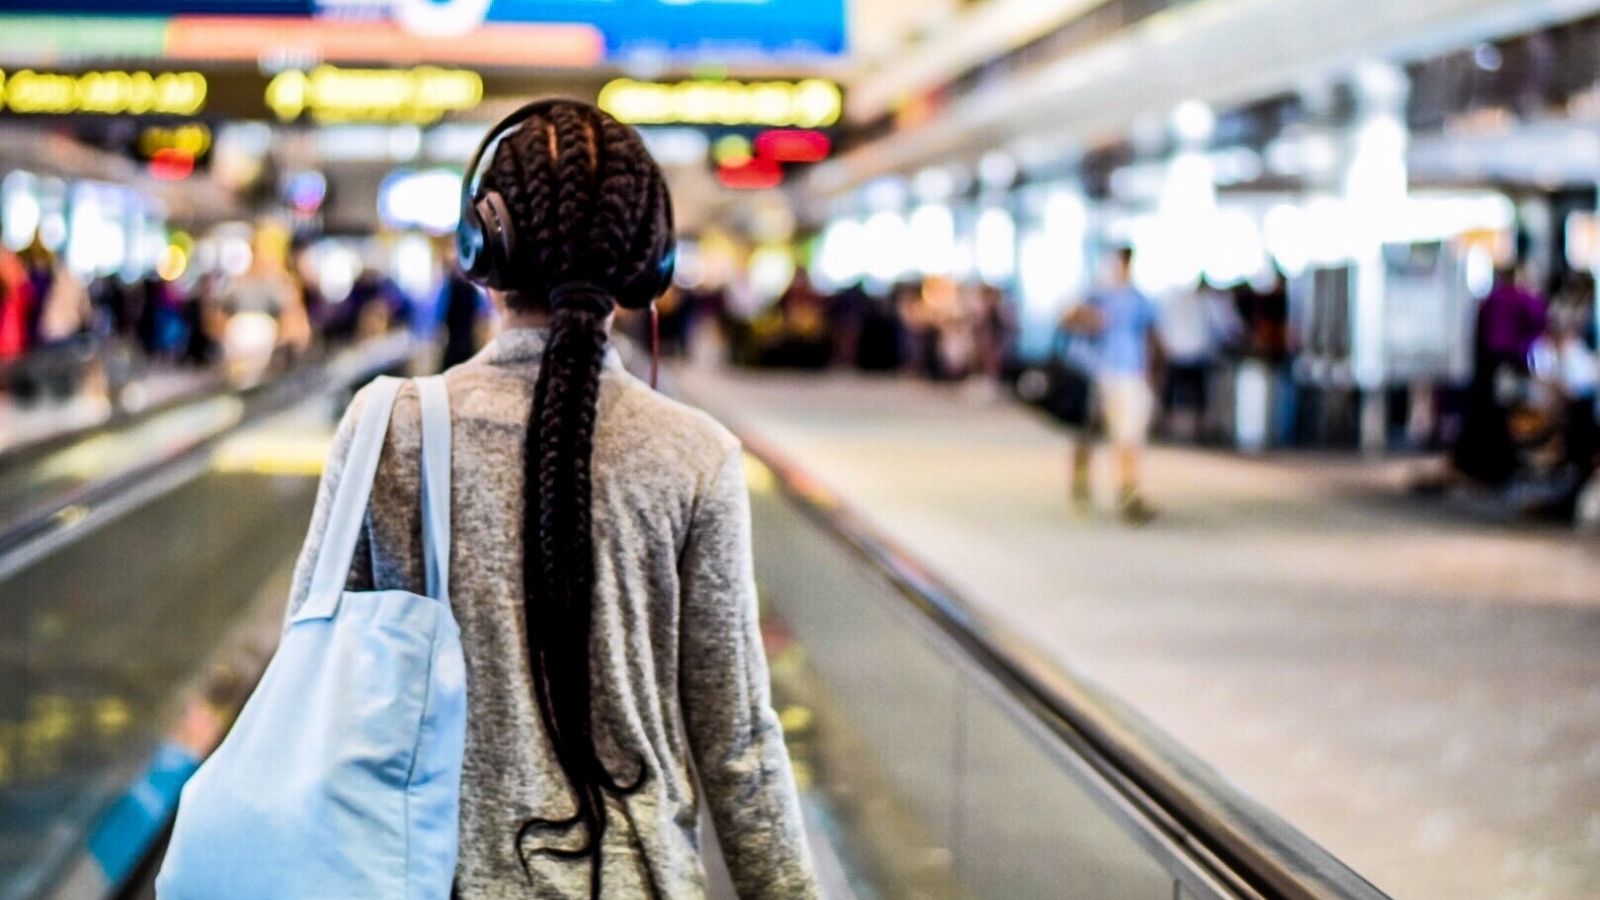 Female traveler in airport (Photo: @wilsonworxphotos via Twenty20)